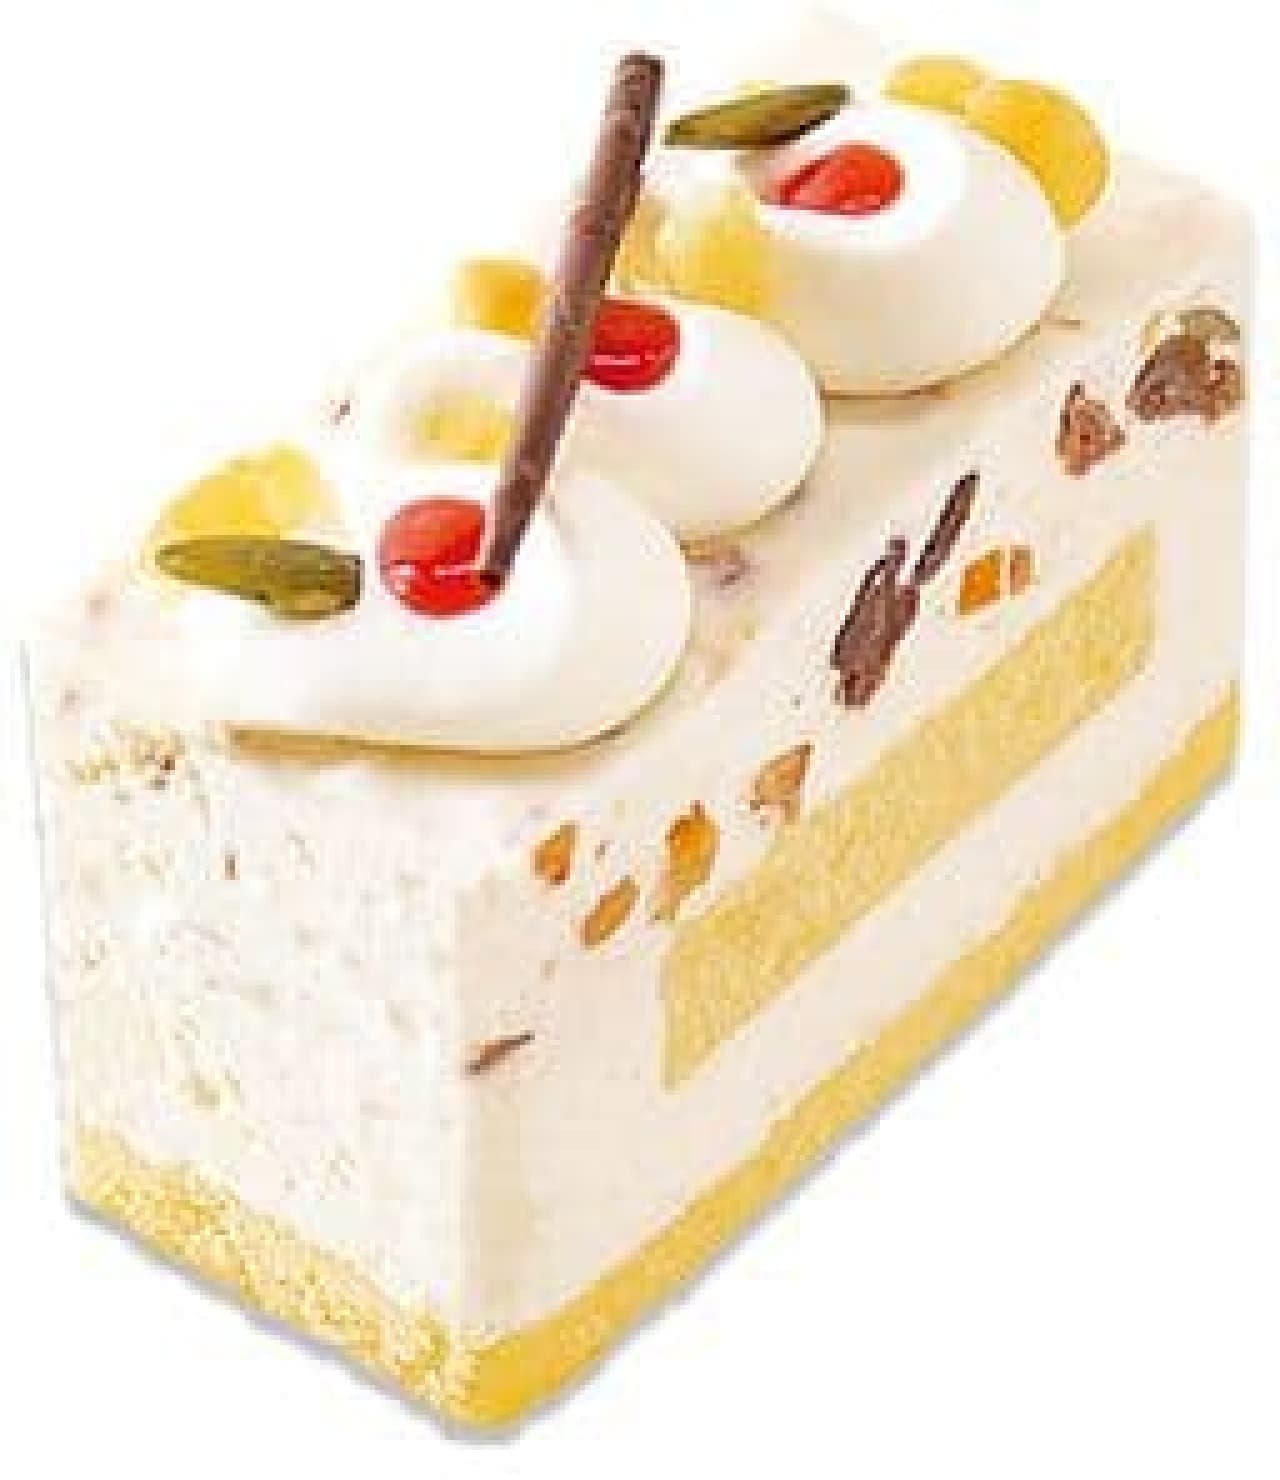 Fujiya "Italian Cheesecake (Cassata)